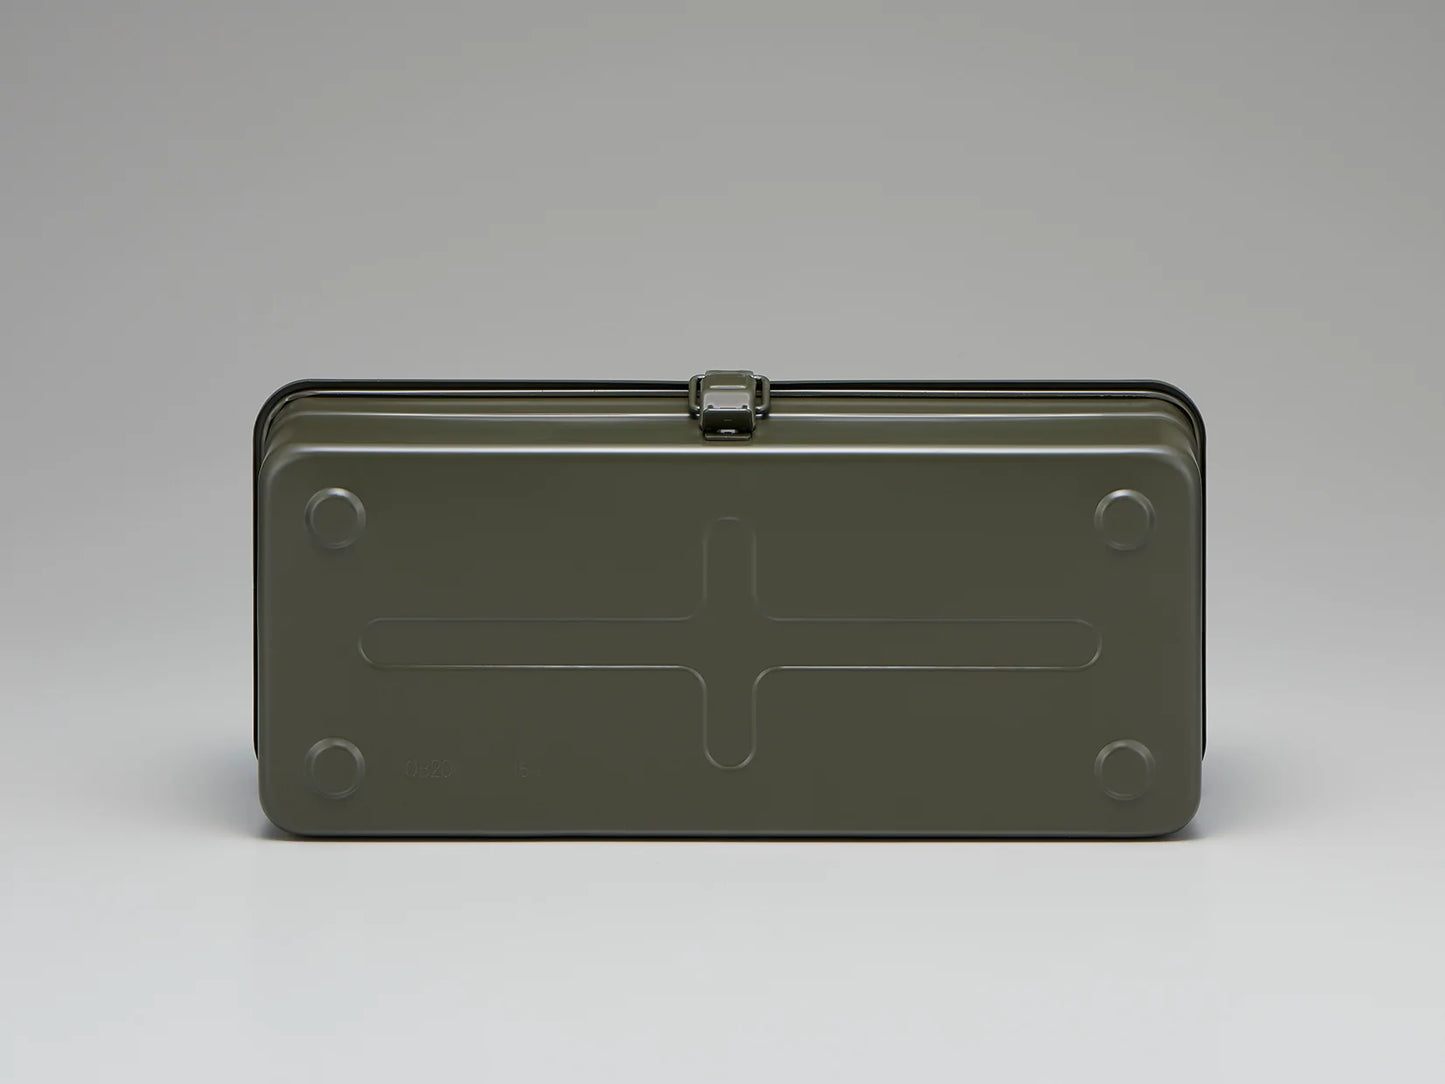 Toyo Steel Y350 metal box